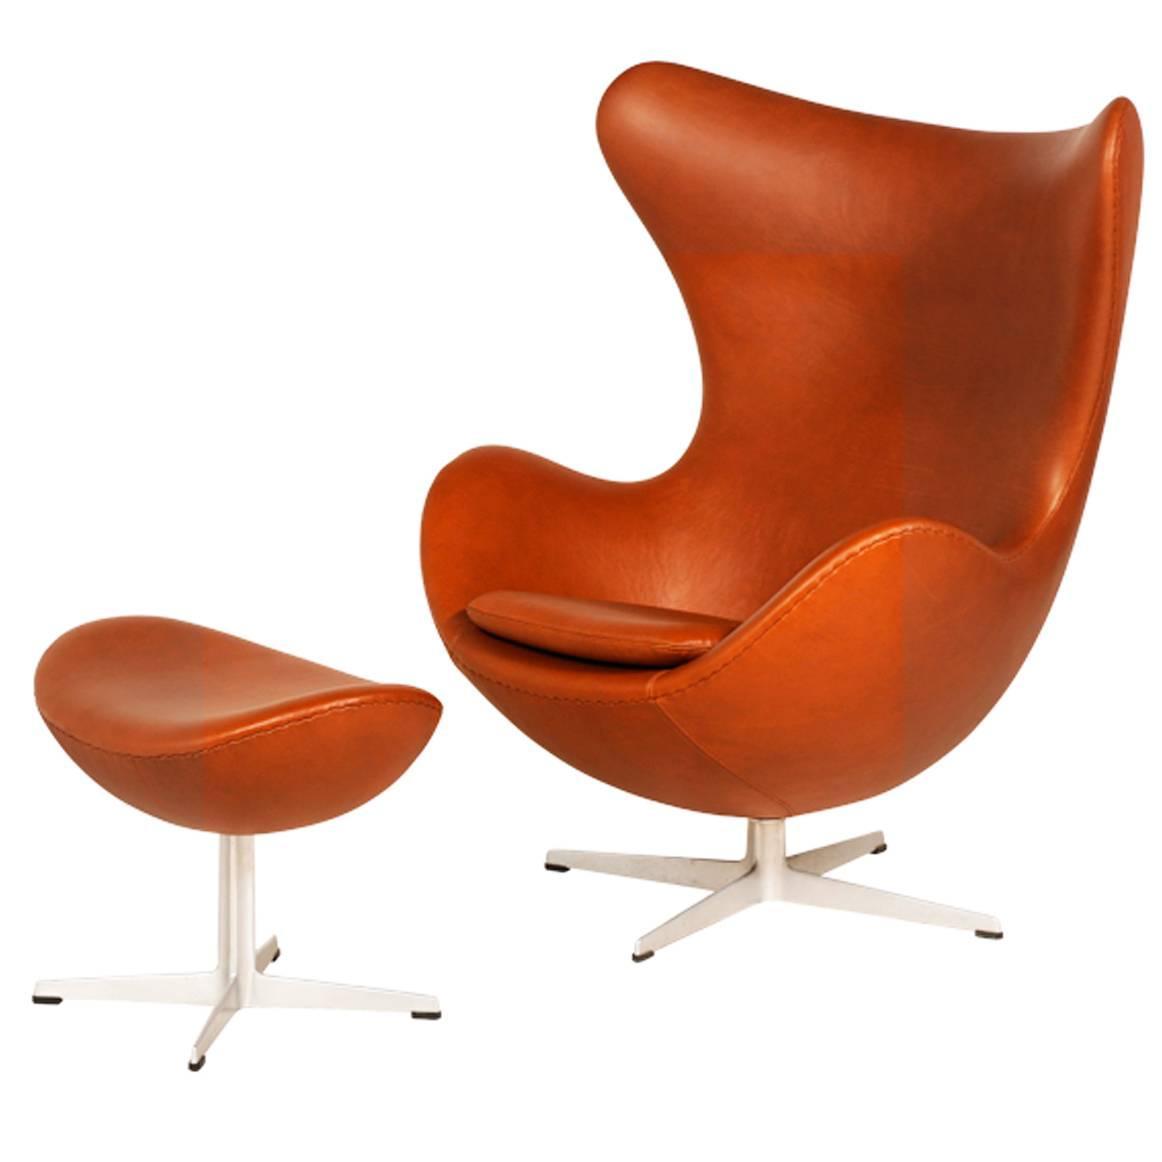 Arne Jacobsen "Egg" Chair with Ottoman for Fritz Hansen For Sale at 1stdibs